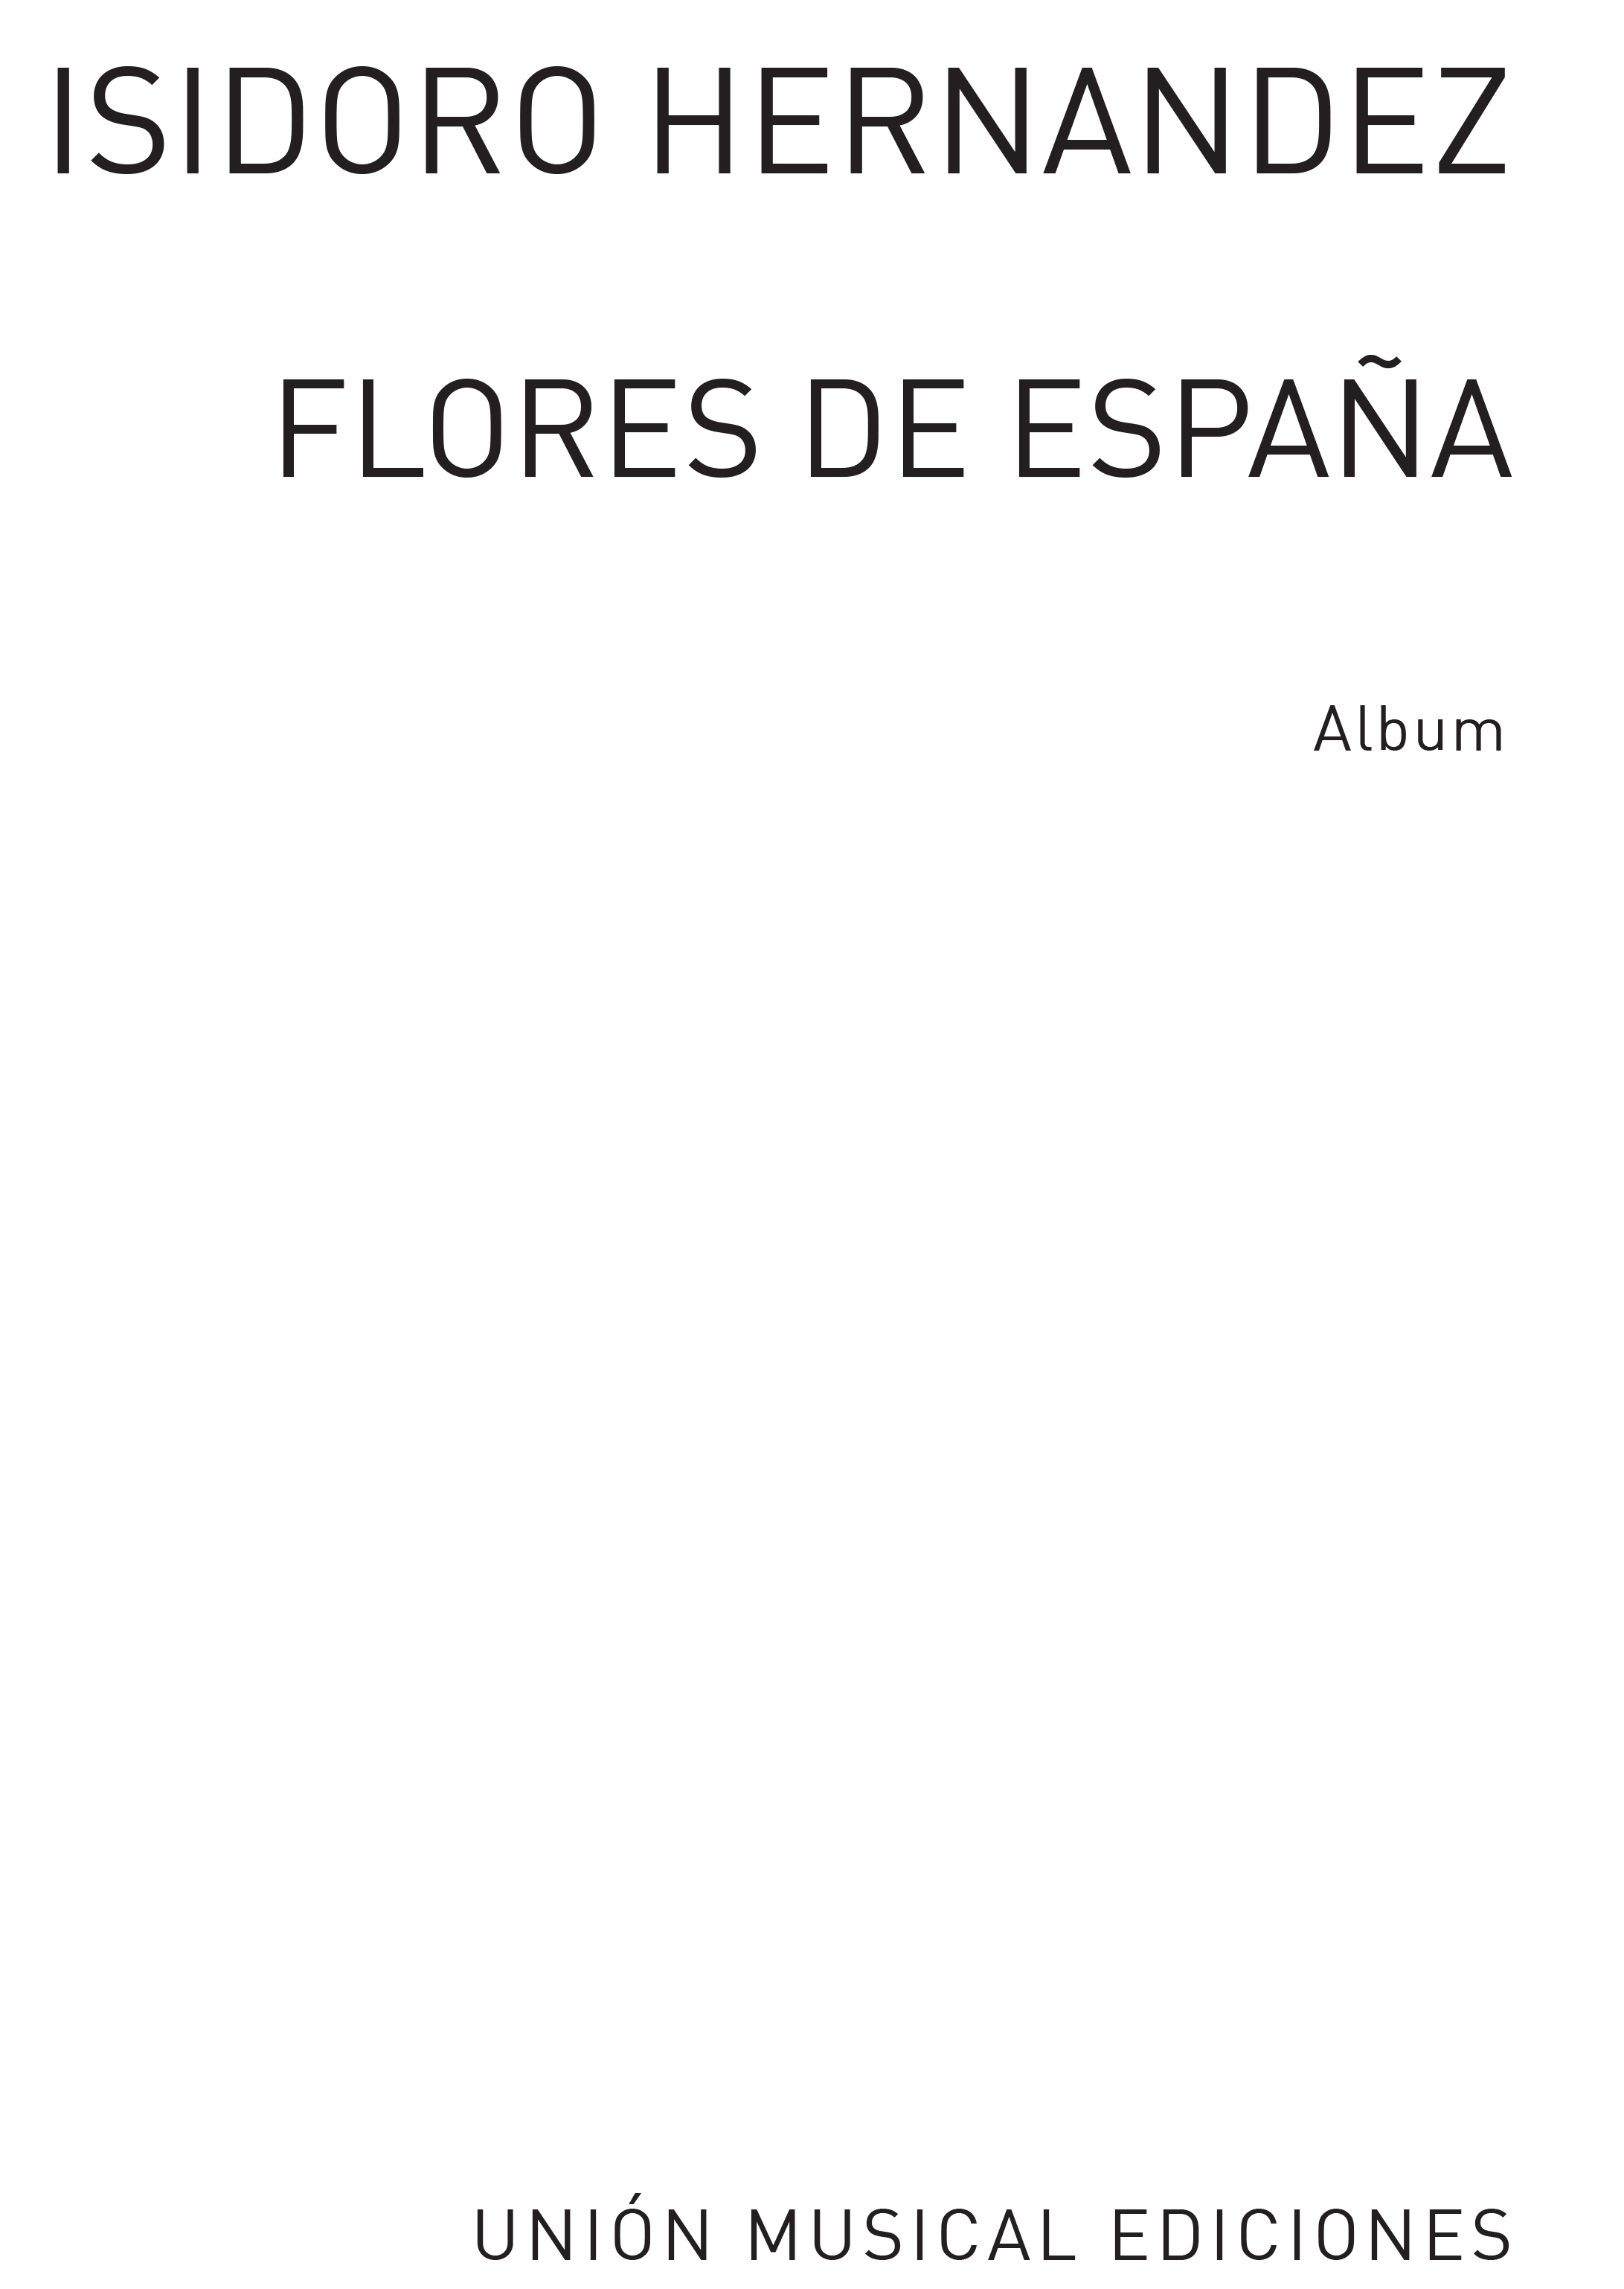 Isidoro Hernandez: Flores De Espana: Voice: Vocal Album